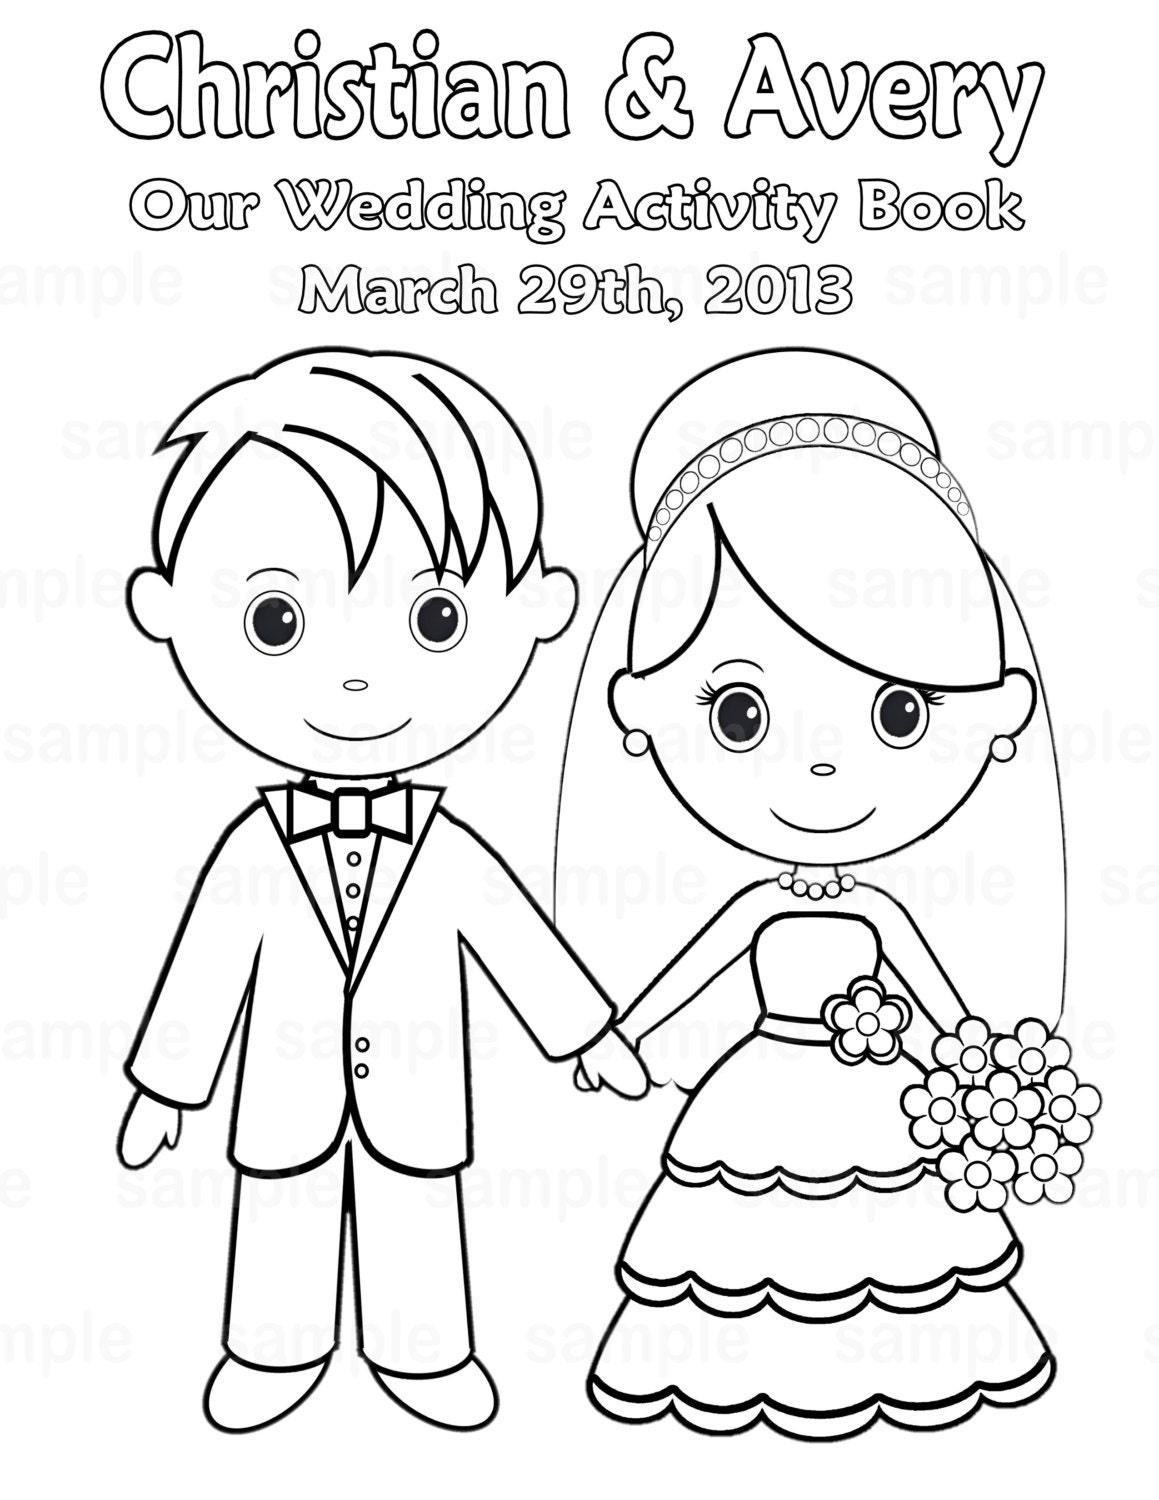 Printable Personalized Wedding coloring activity by SugarPieStudio